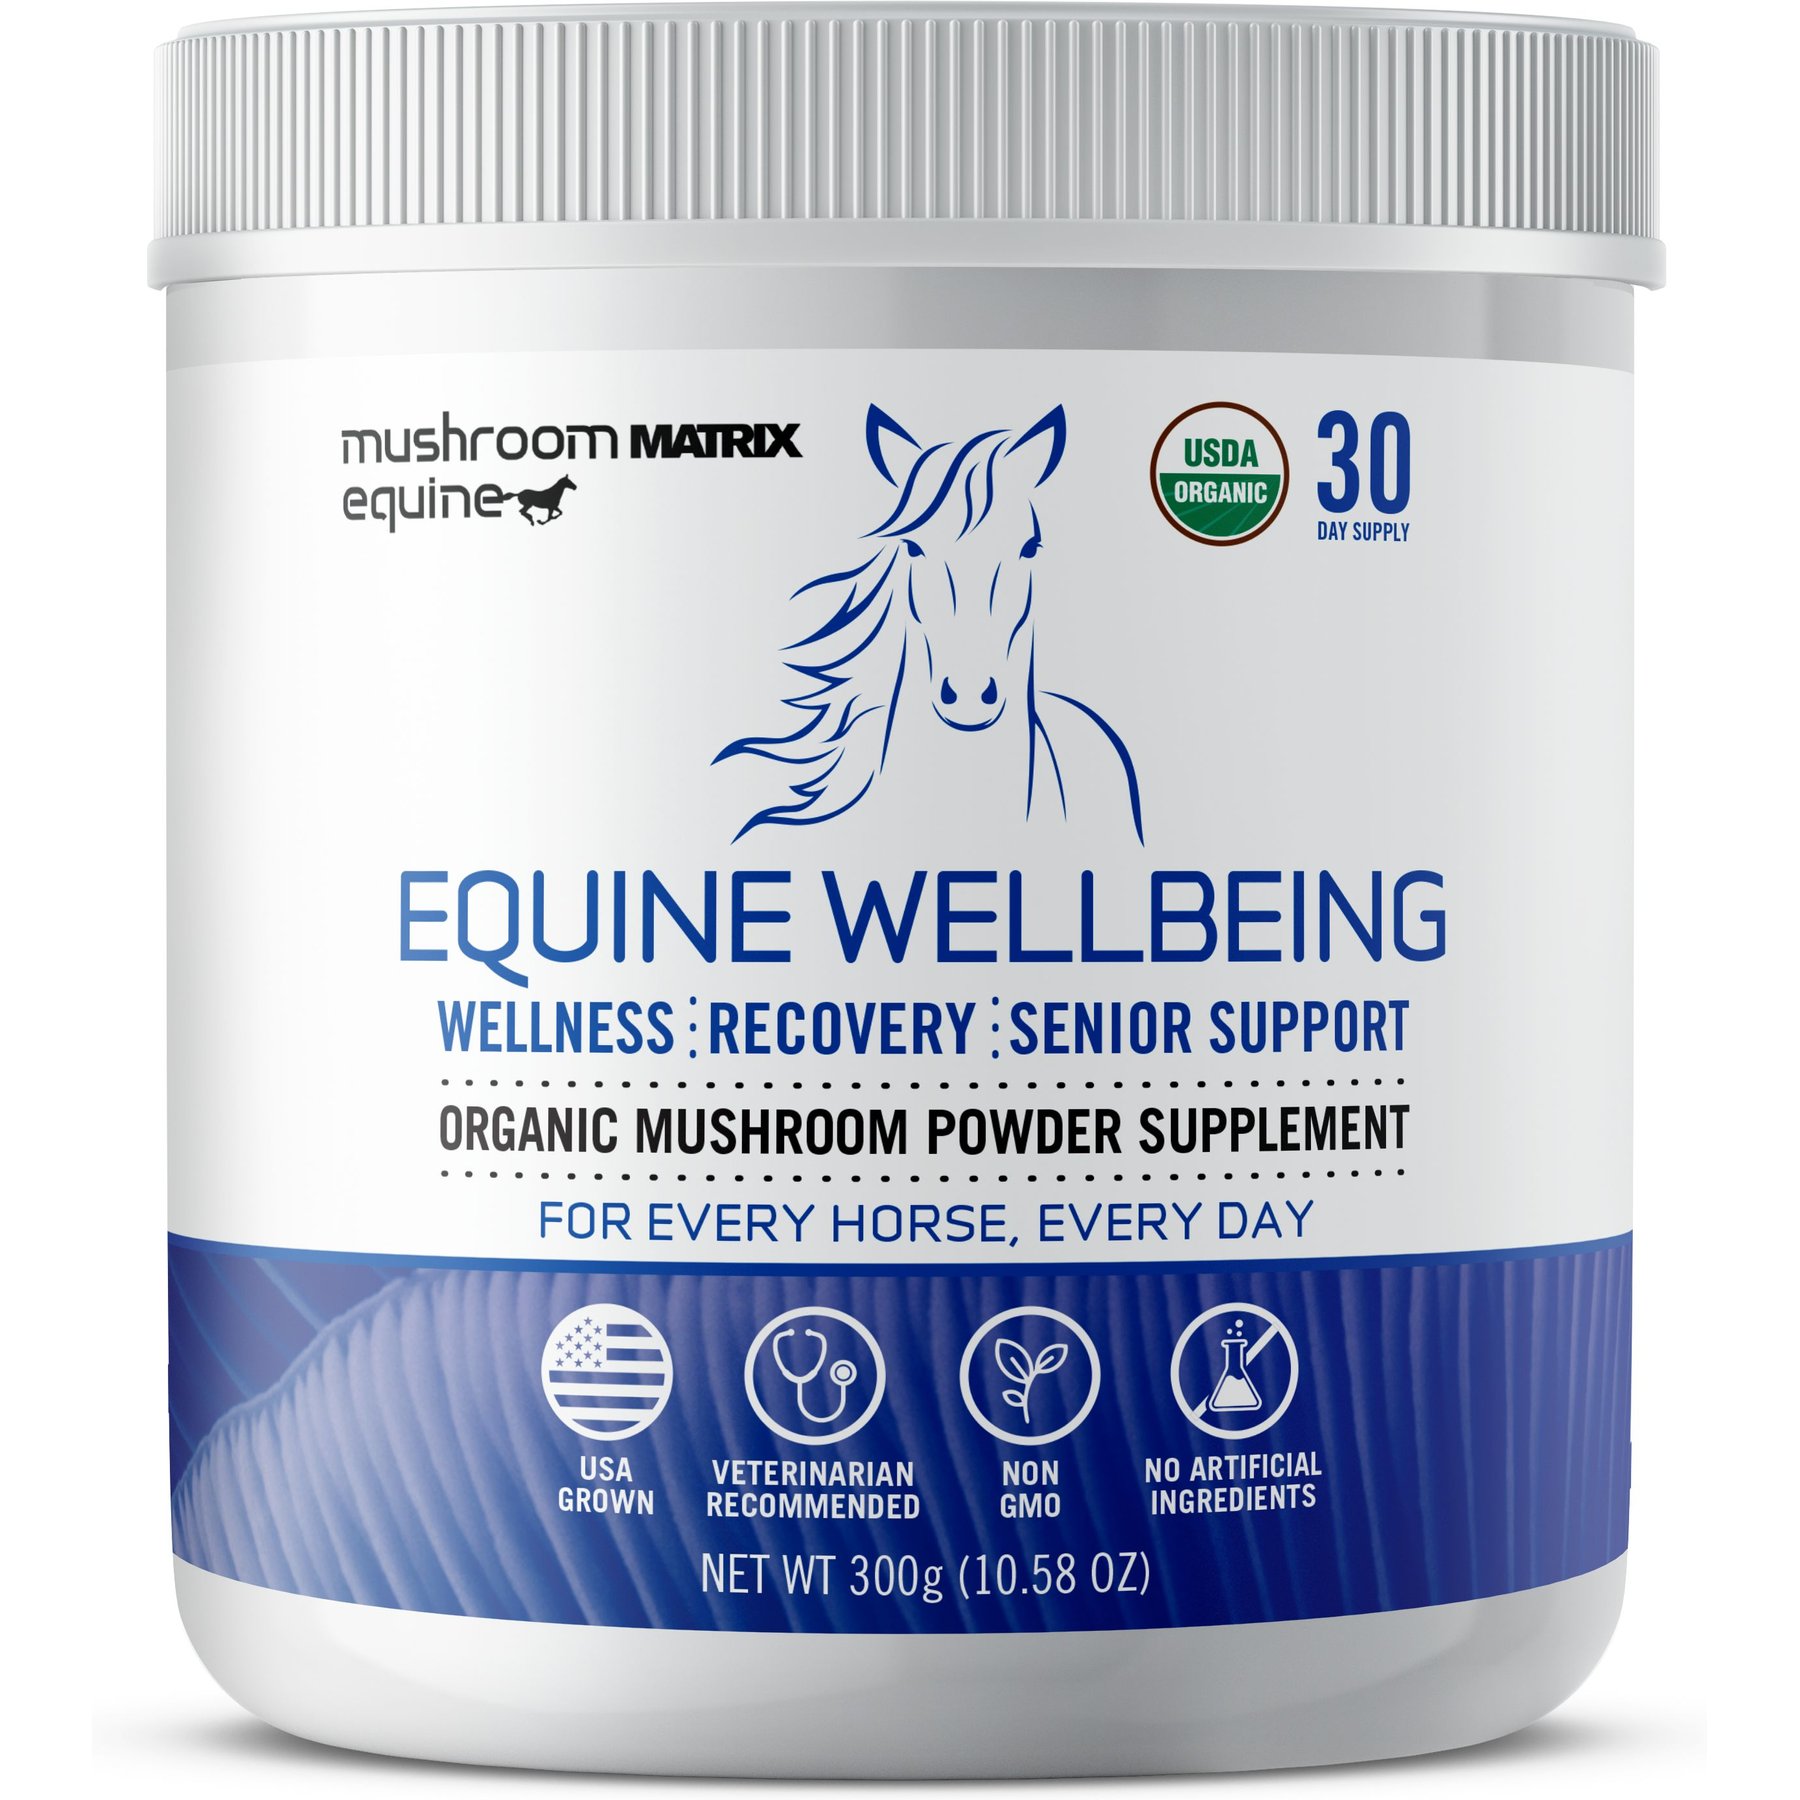 Tribute Equine Nutrition Constant Comfort Gastric Health Horse Supplement,  15-lbs block